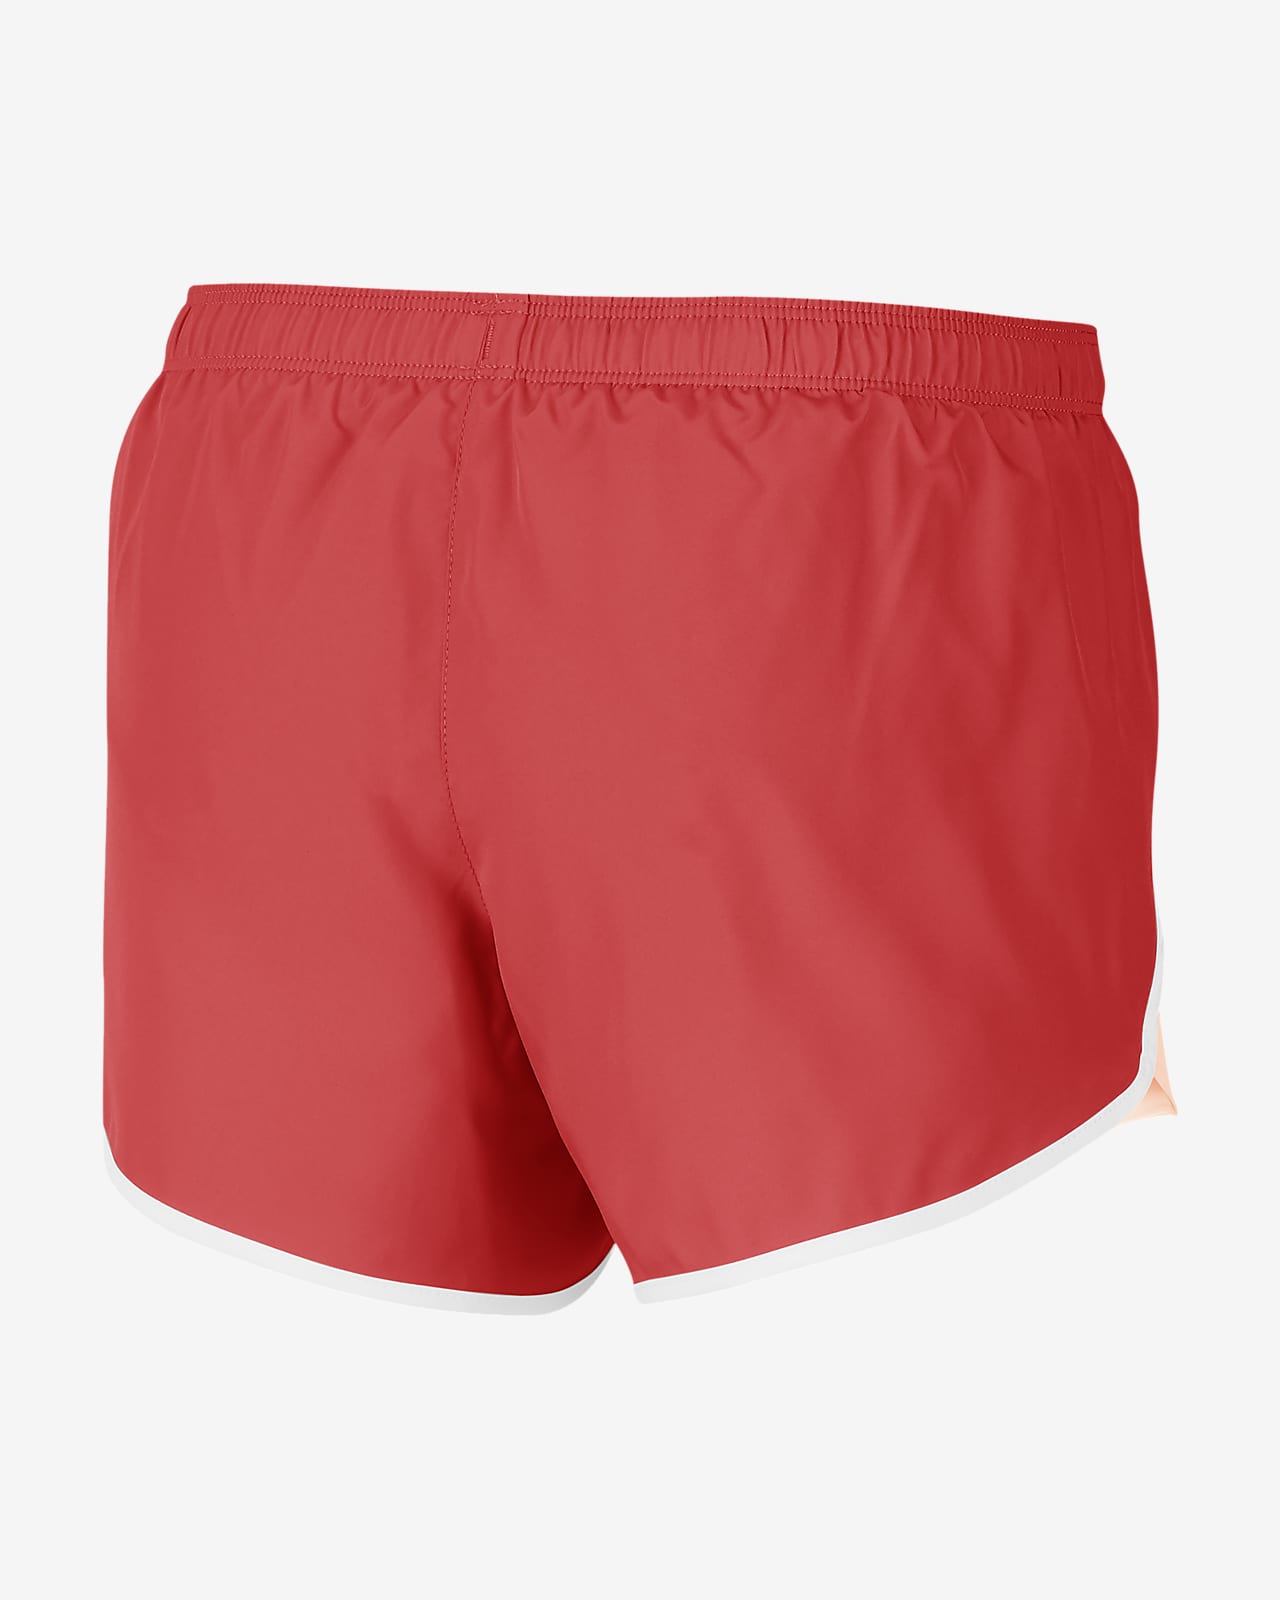 girls red running shorts